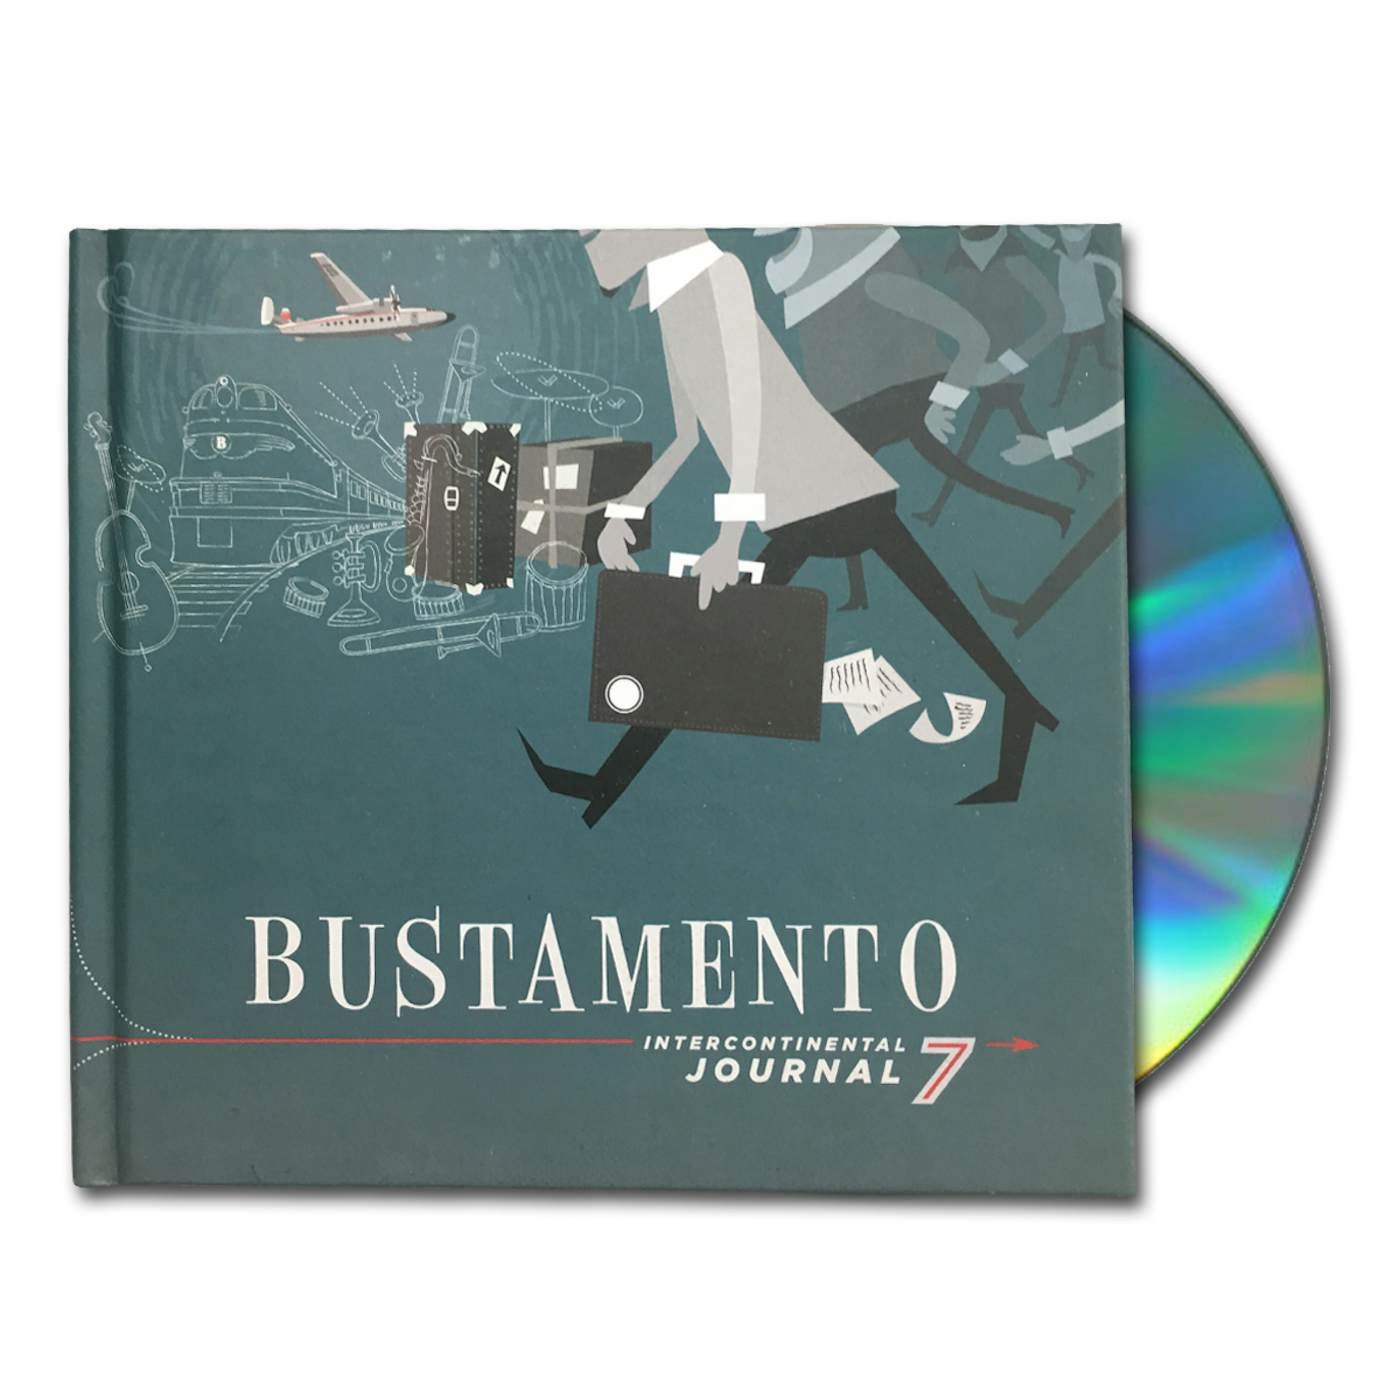 Bustamento - Intercontinental Journal 7 CD